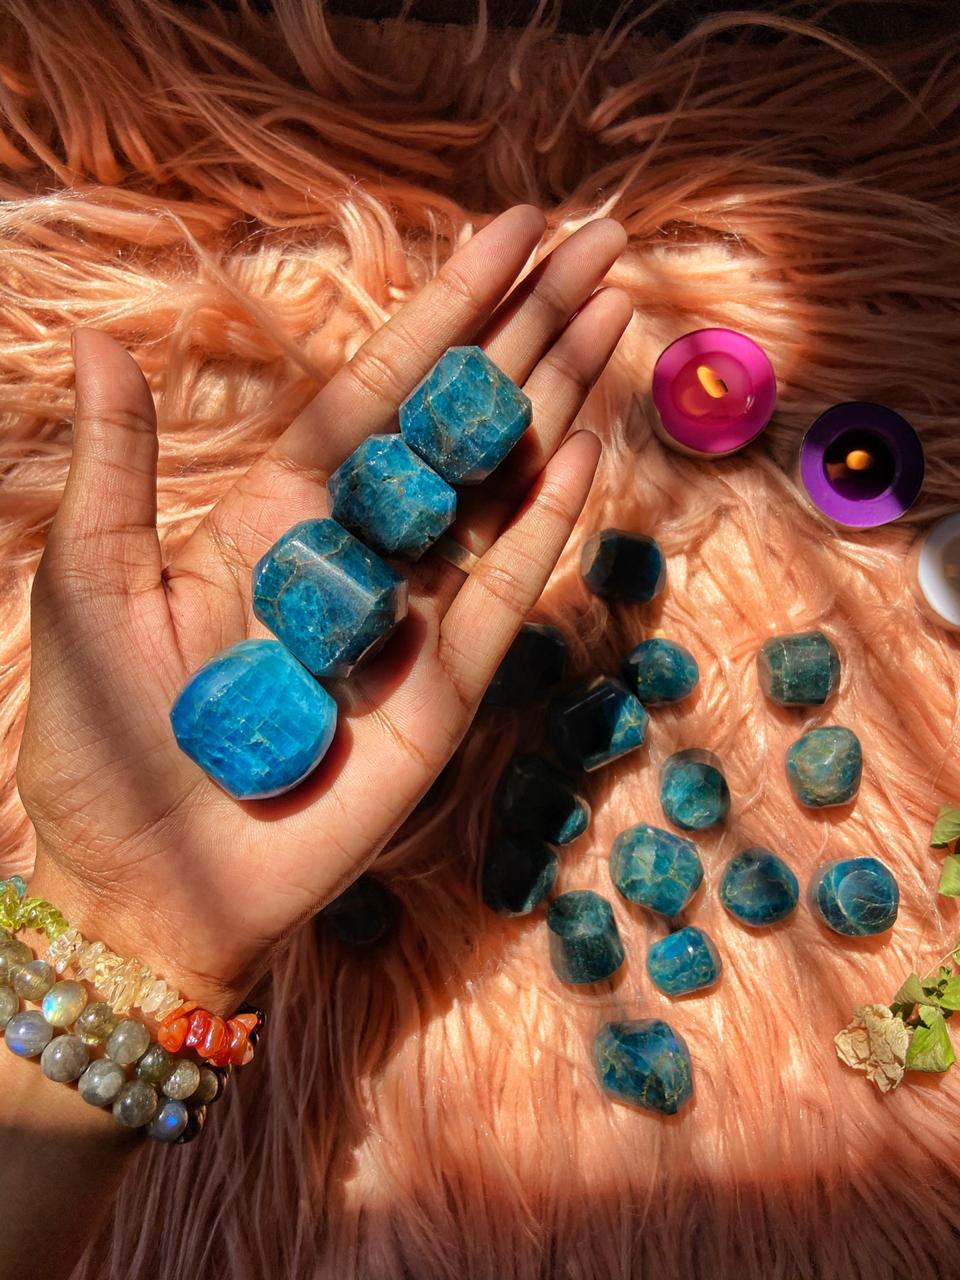 Blue Apatite Tumble Stone | Of Motivation Crystal & Stones